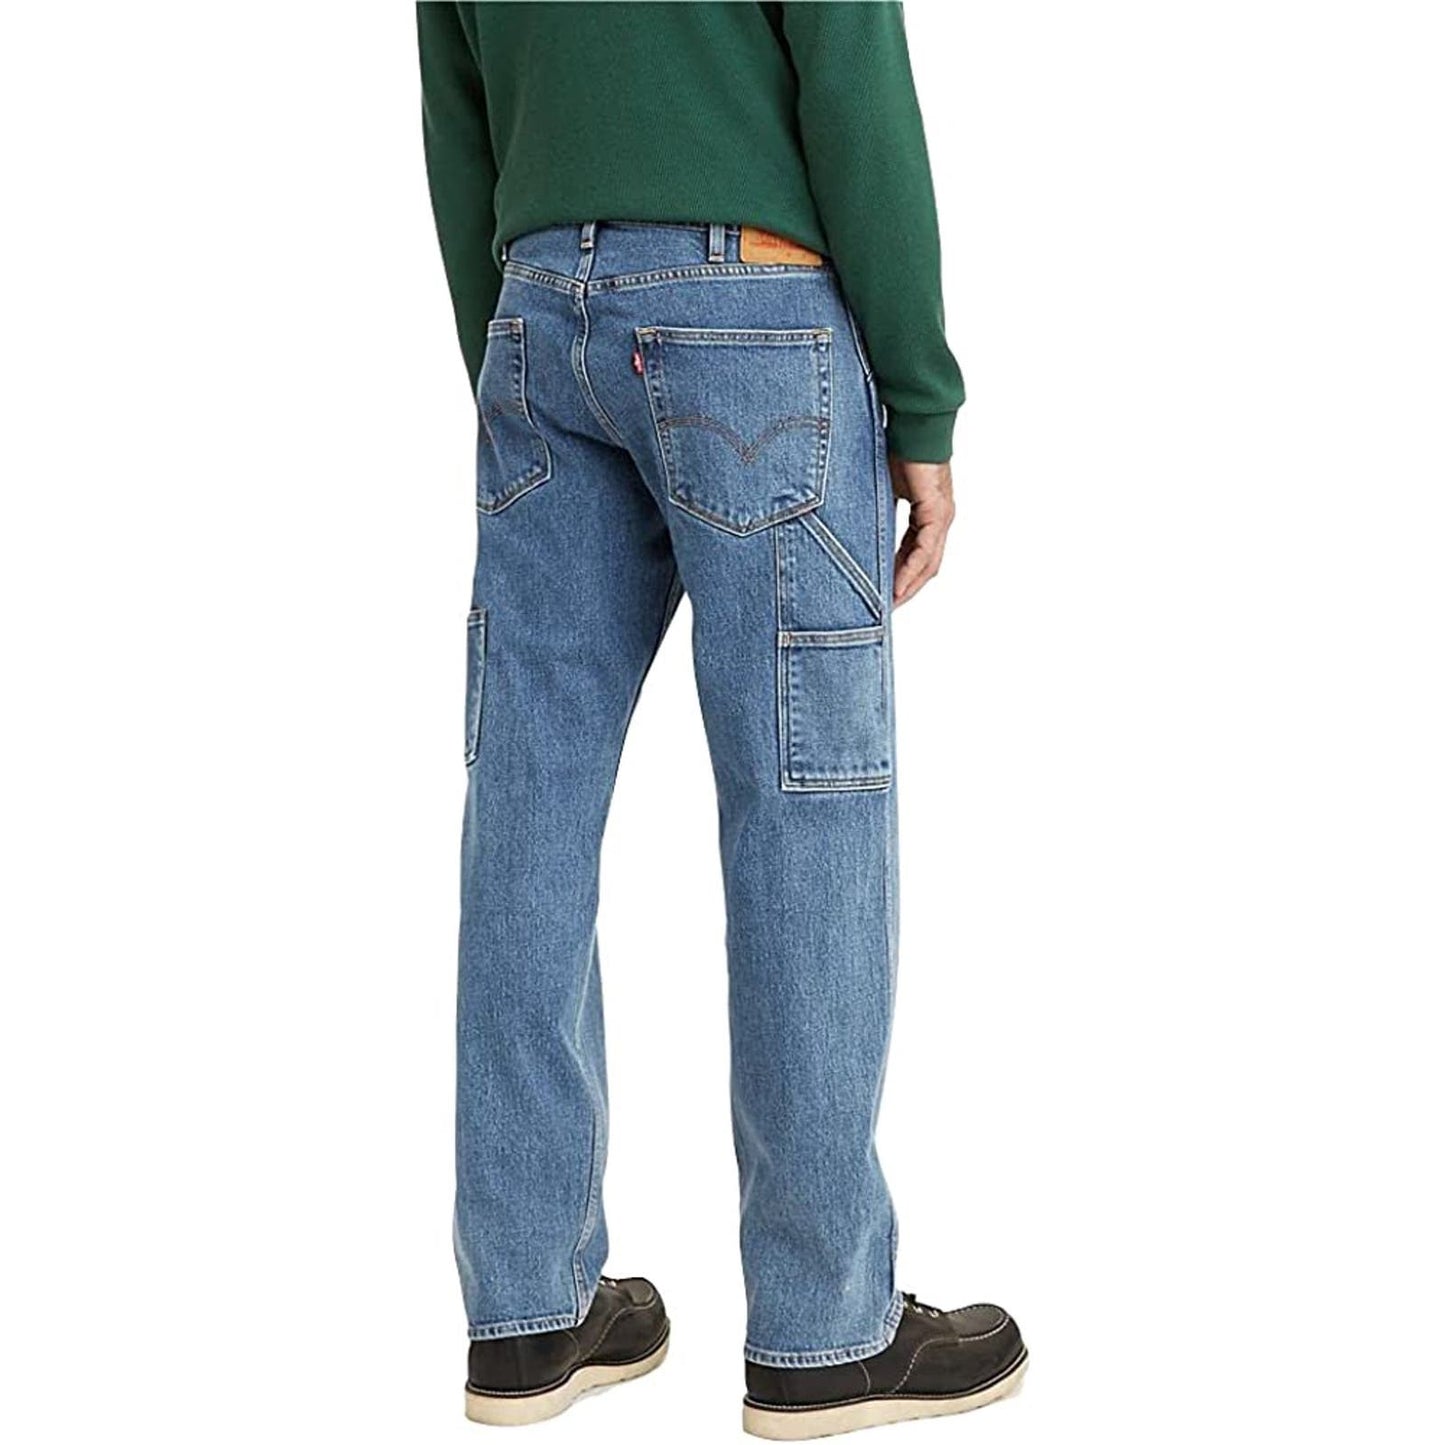 Levi's Mens Workwear Utility Cargo Jeans Medium Wash Blue, Size 30x32, NWT!